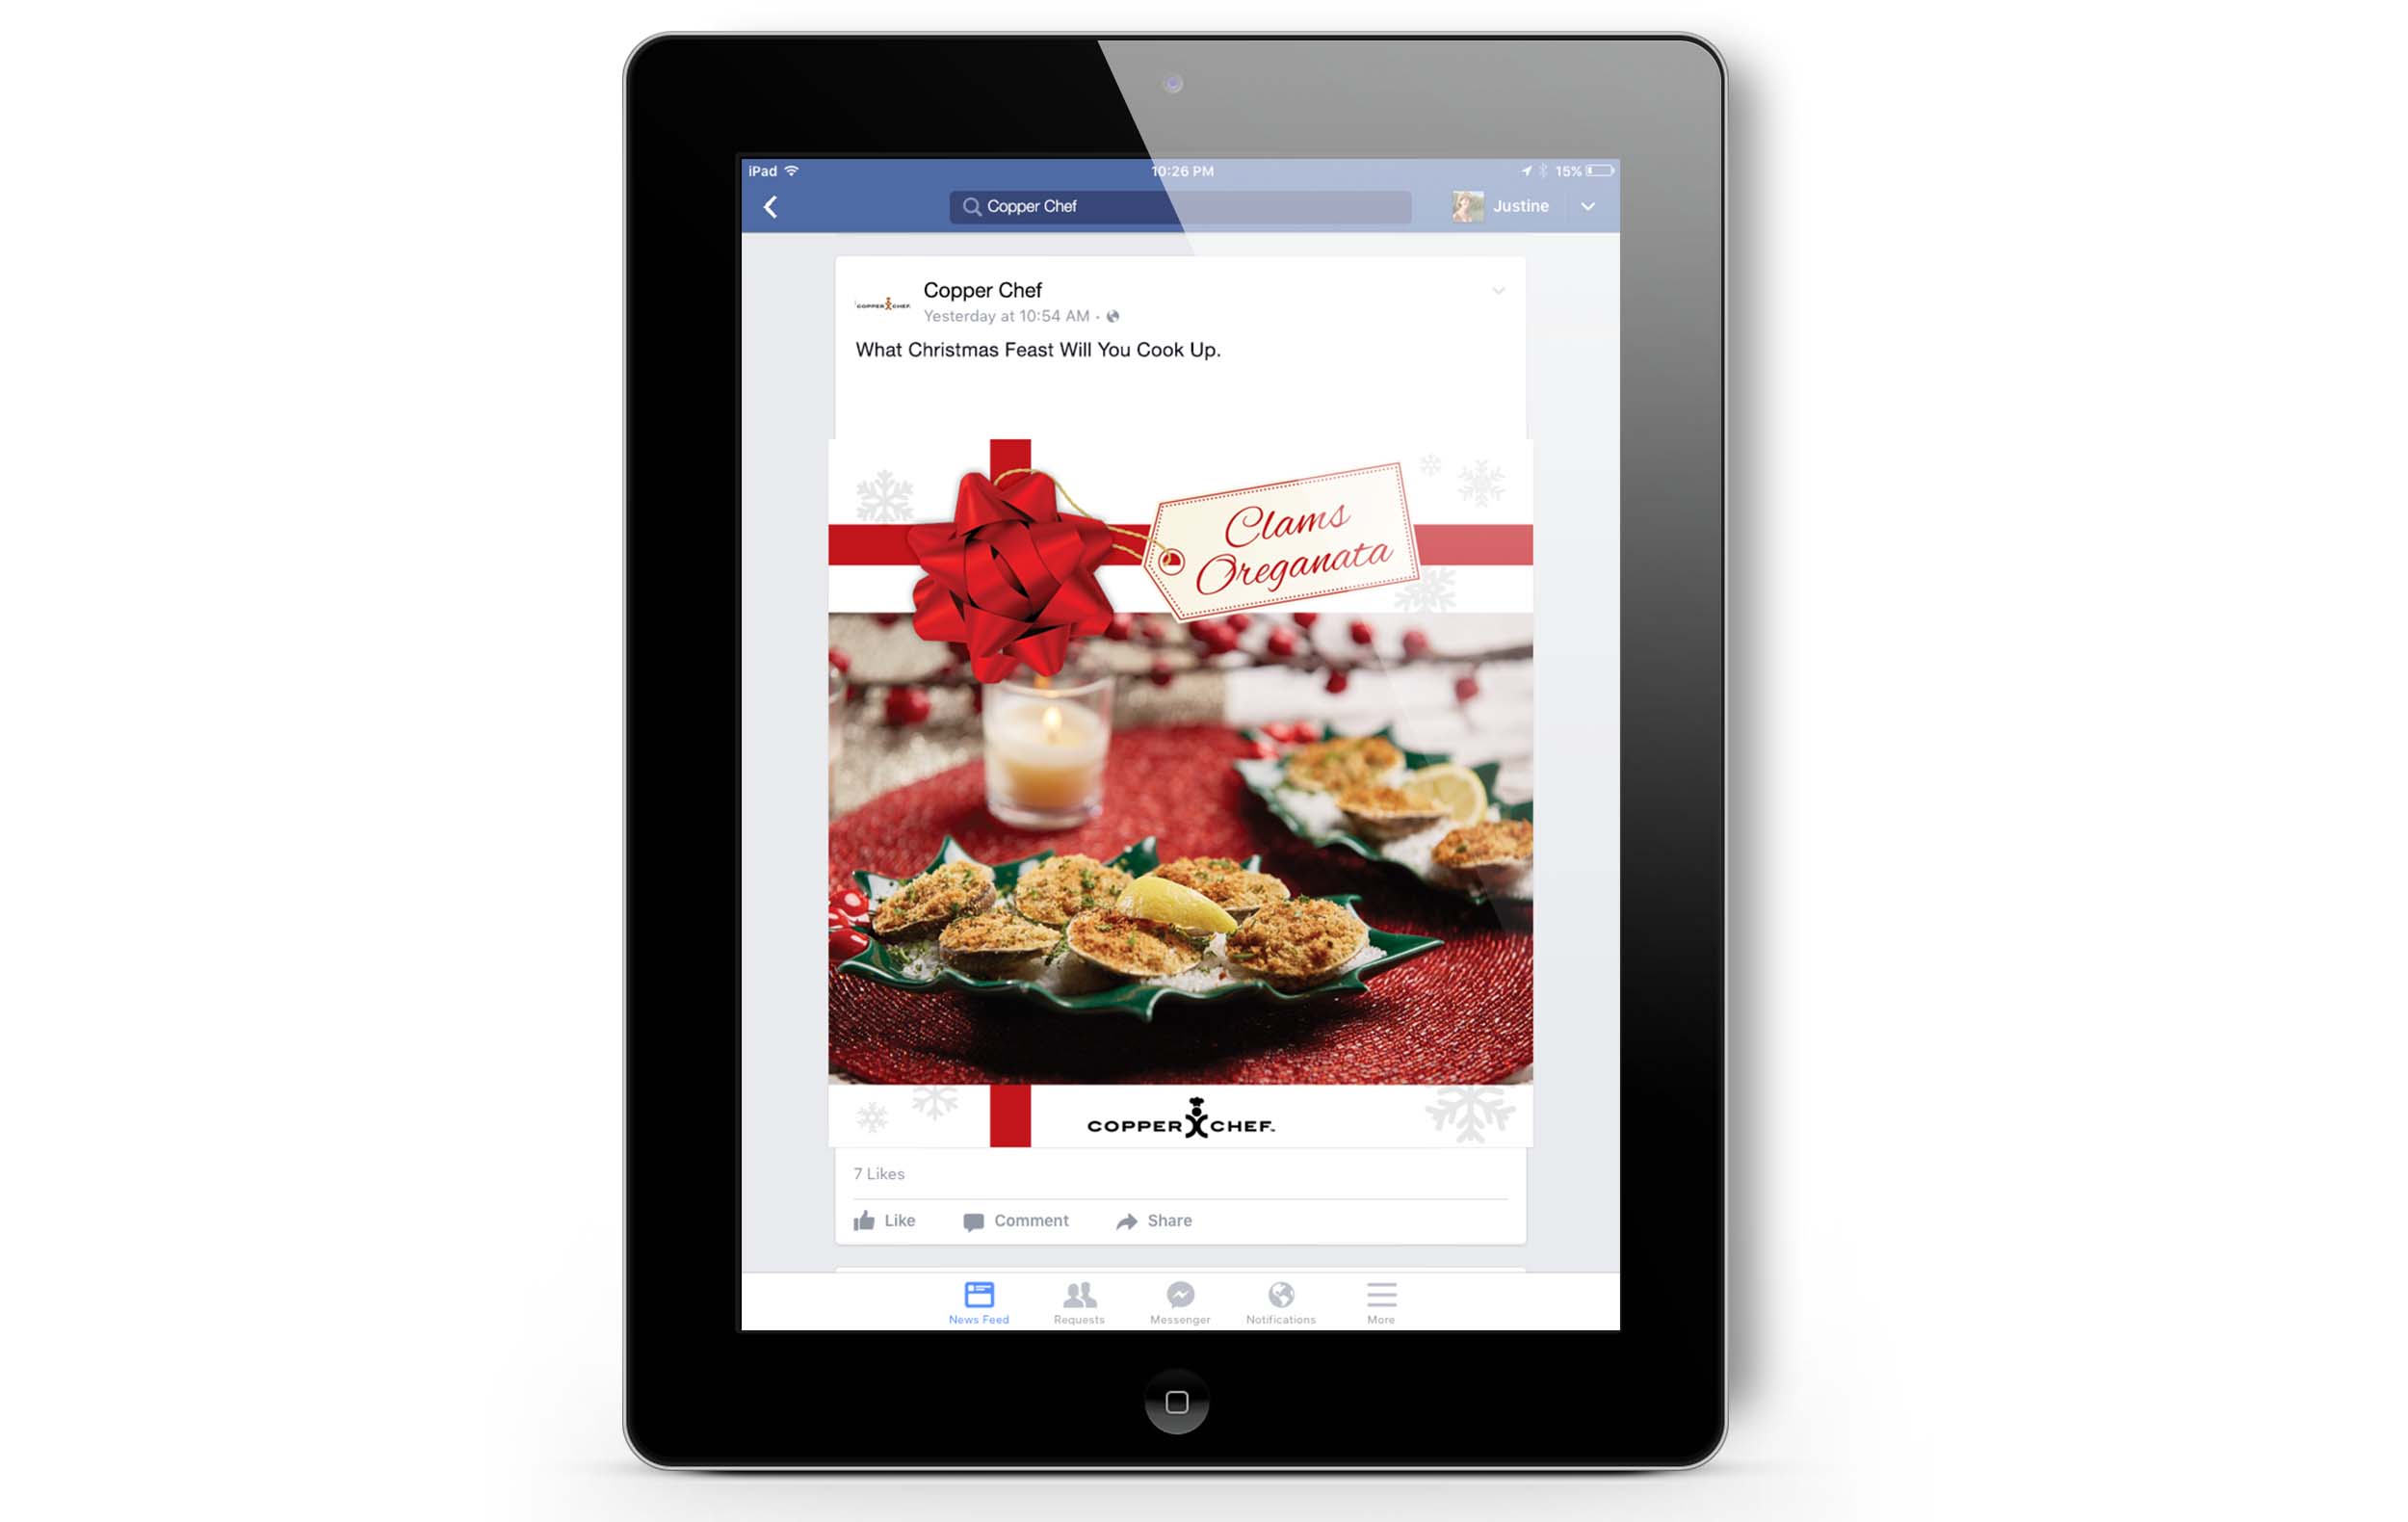 Tristar_Copper Chef_Christmas_Facebook_Mock Up_3.jpg